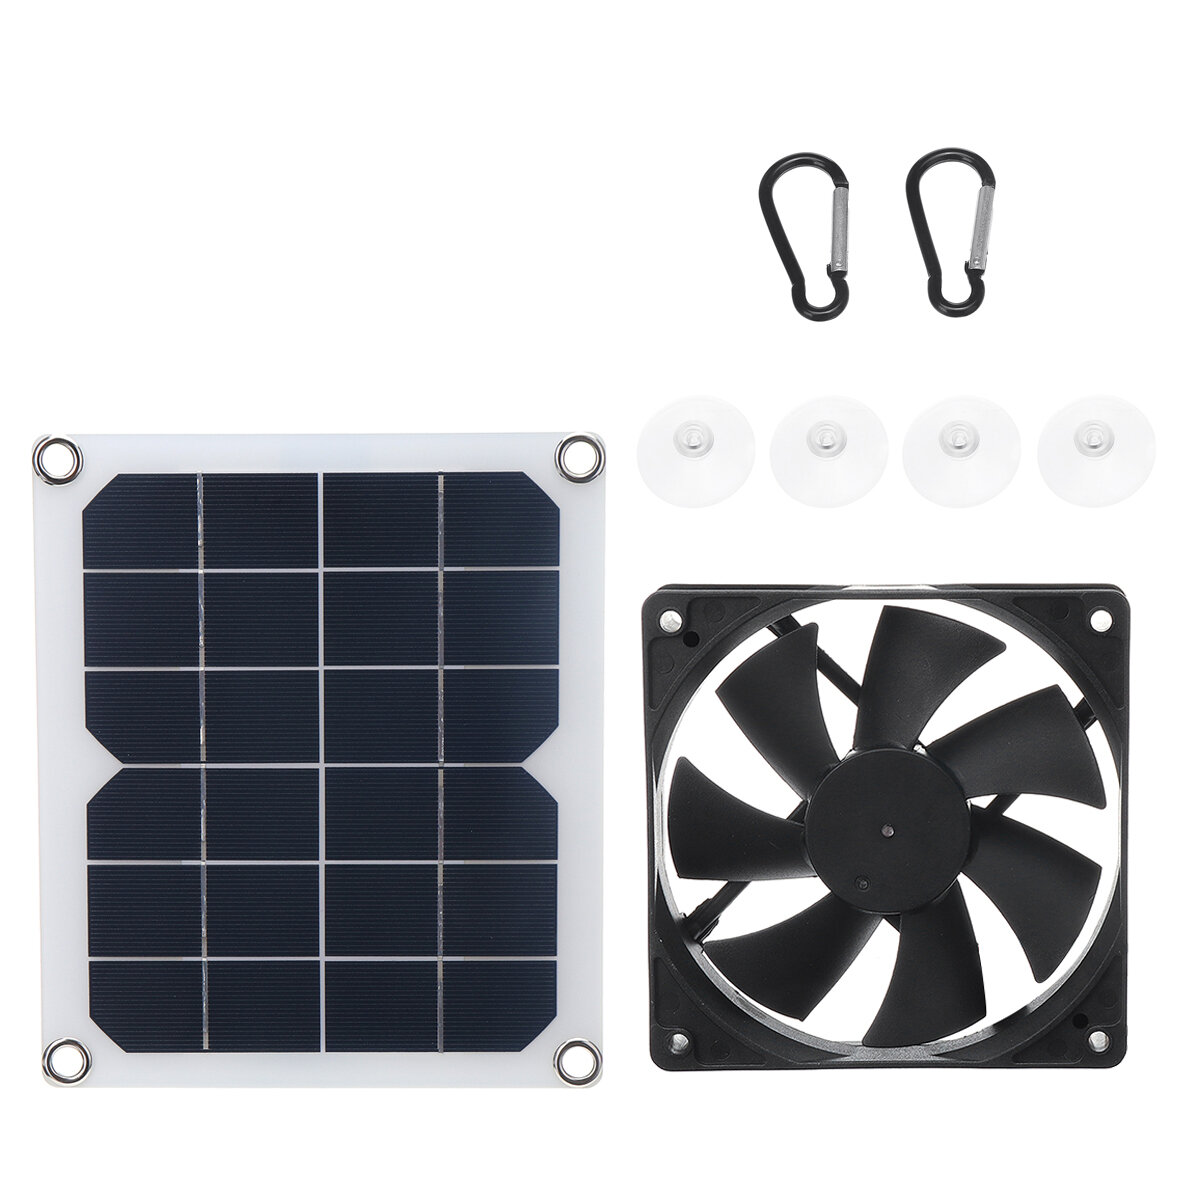 

6V 10W Solar Panel Powered Fan Mini Ventilator for Pet House Greenhouse RV Roof